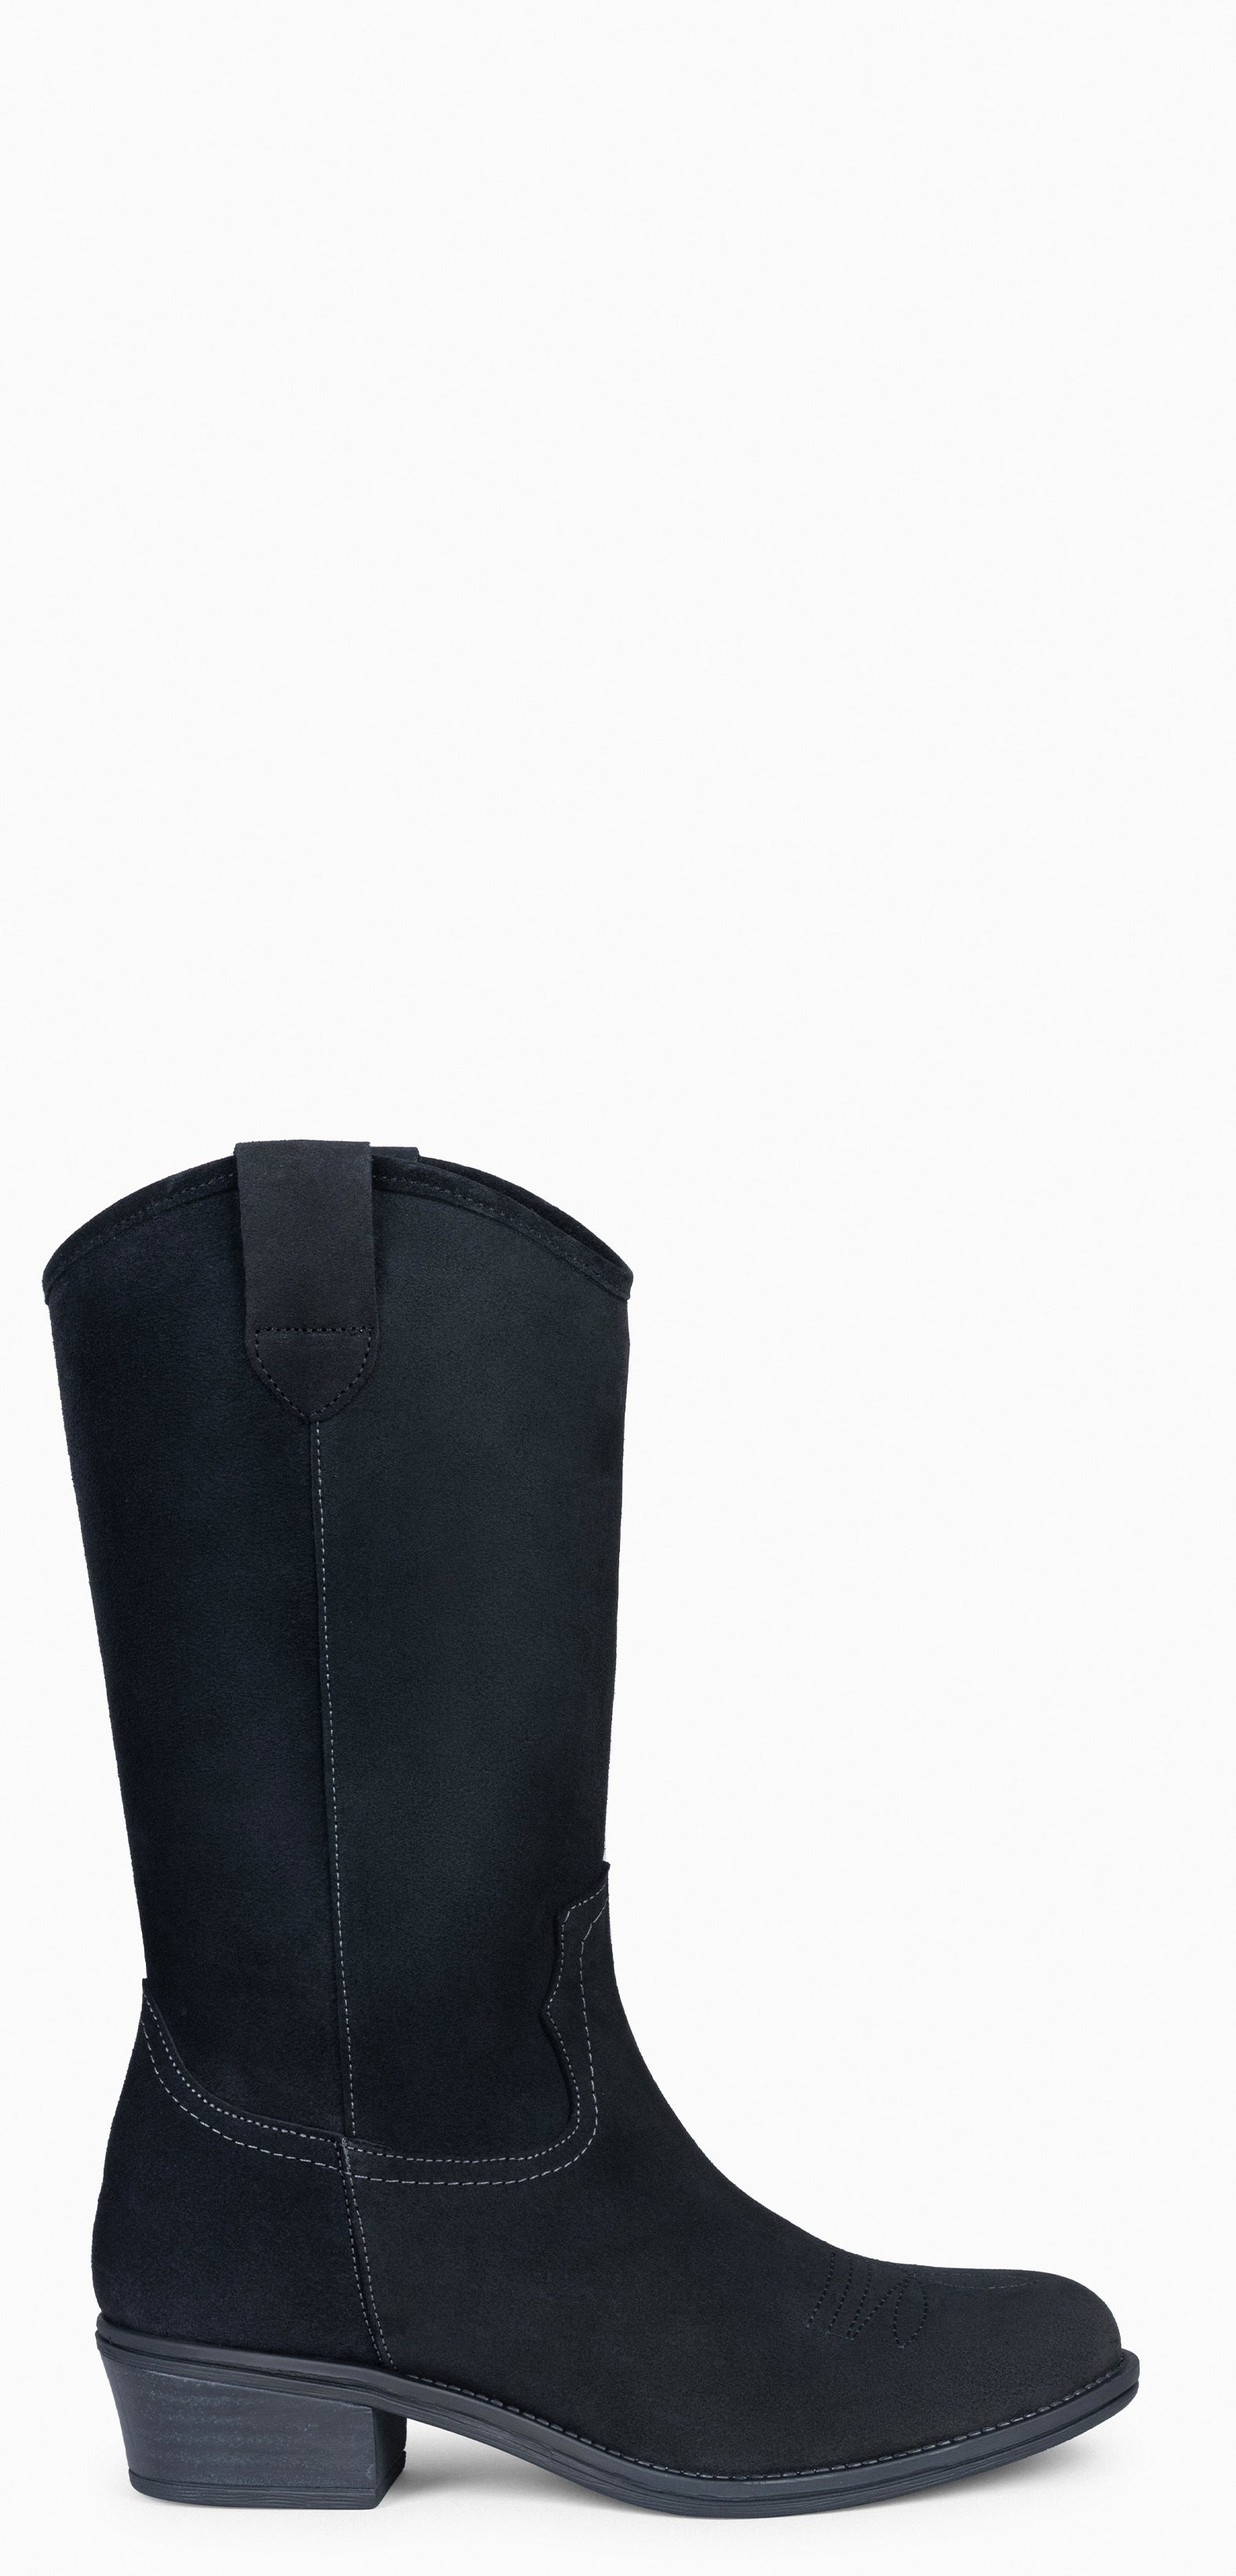 ONTARIO – BLACK Women Cowboy Boots